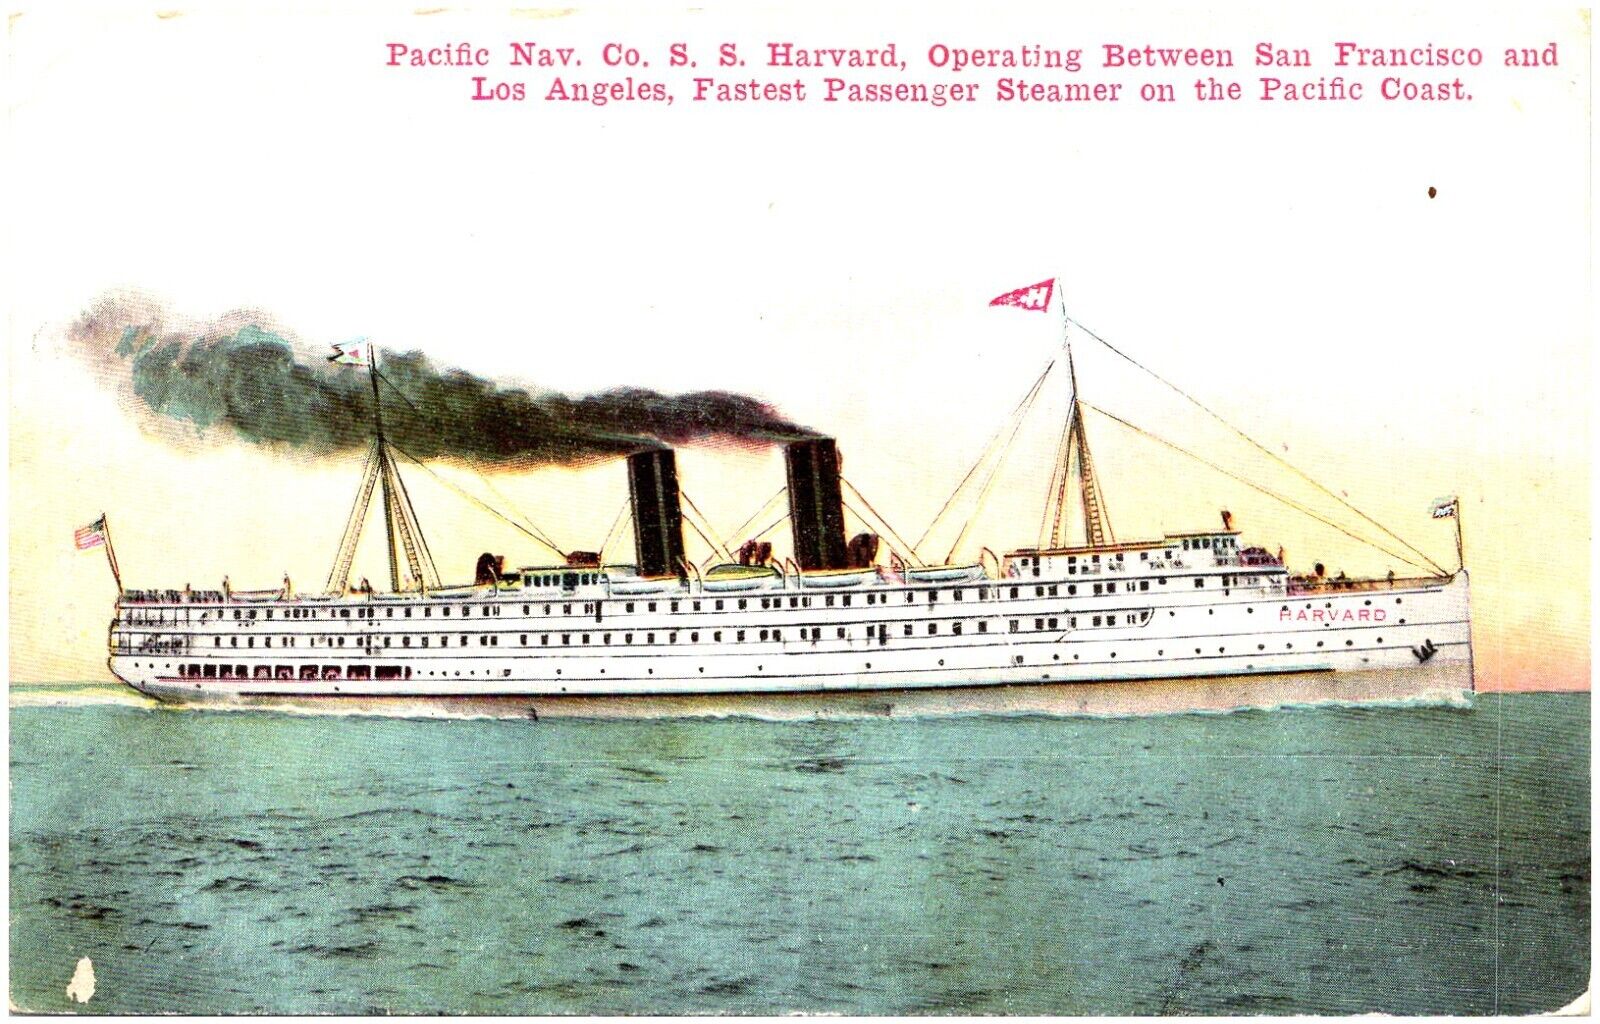 SS Harvard, Pacific Nav. Co. Ship, Fastest Passenger Steamer on Calif. Coast